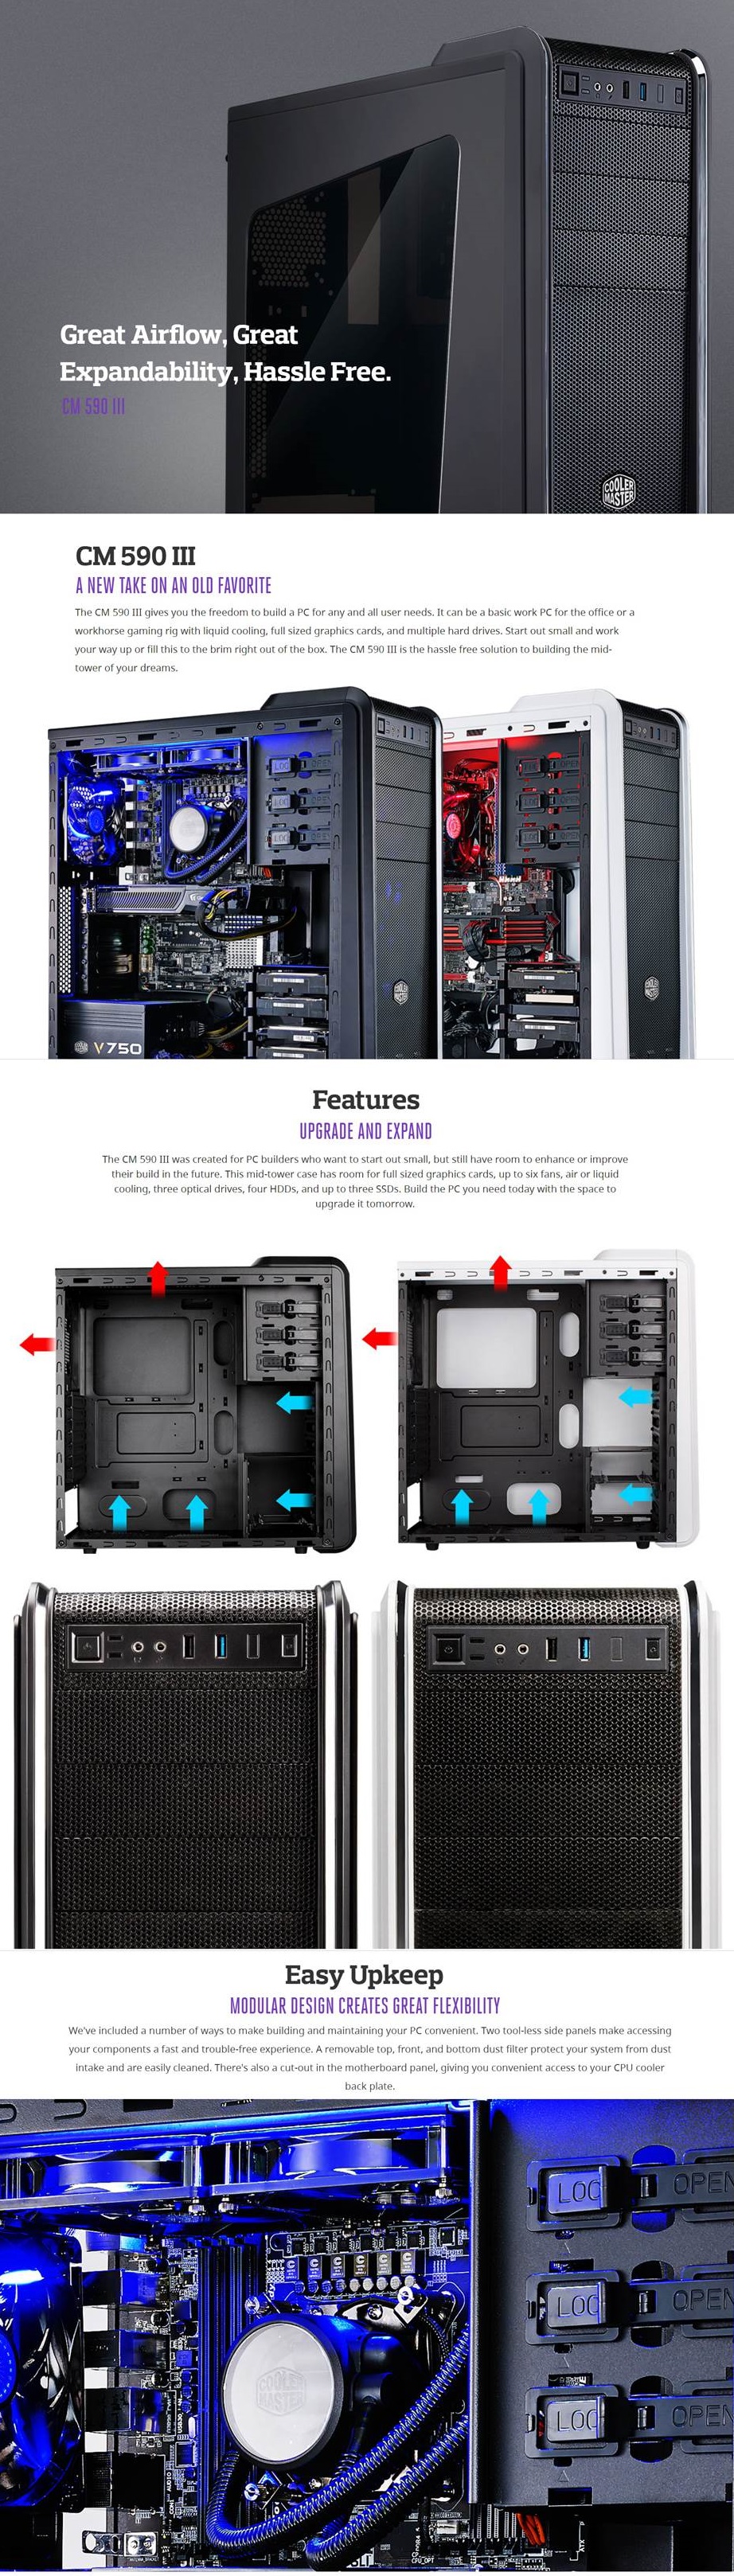 Computers Cases Cooler Master Case Cm 590 Iii C Ventana Rc 593 Kwn2